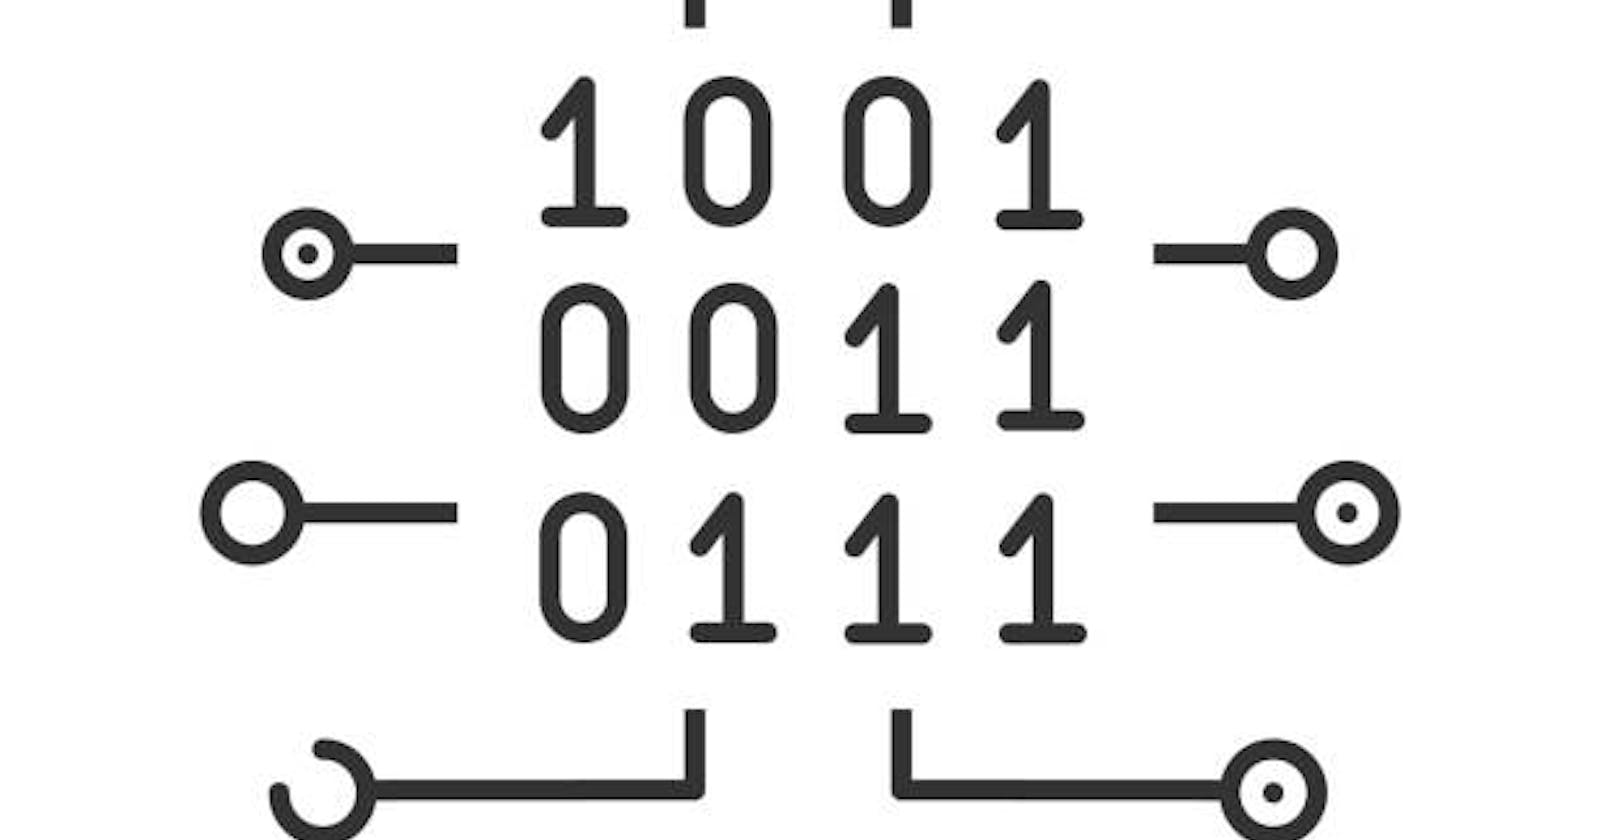 Handling Binary Data in JavaScript